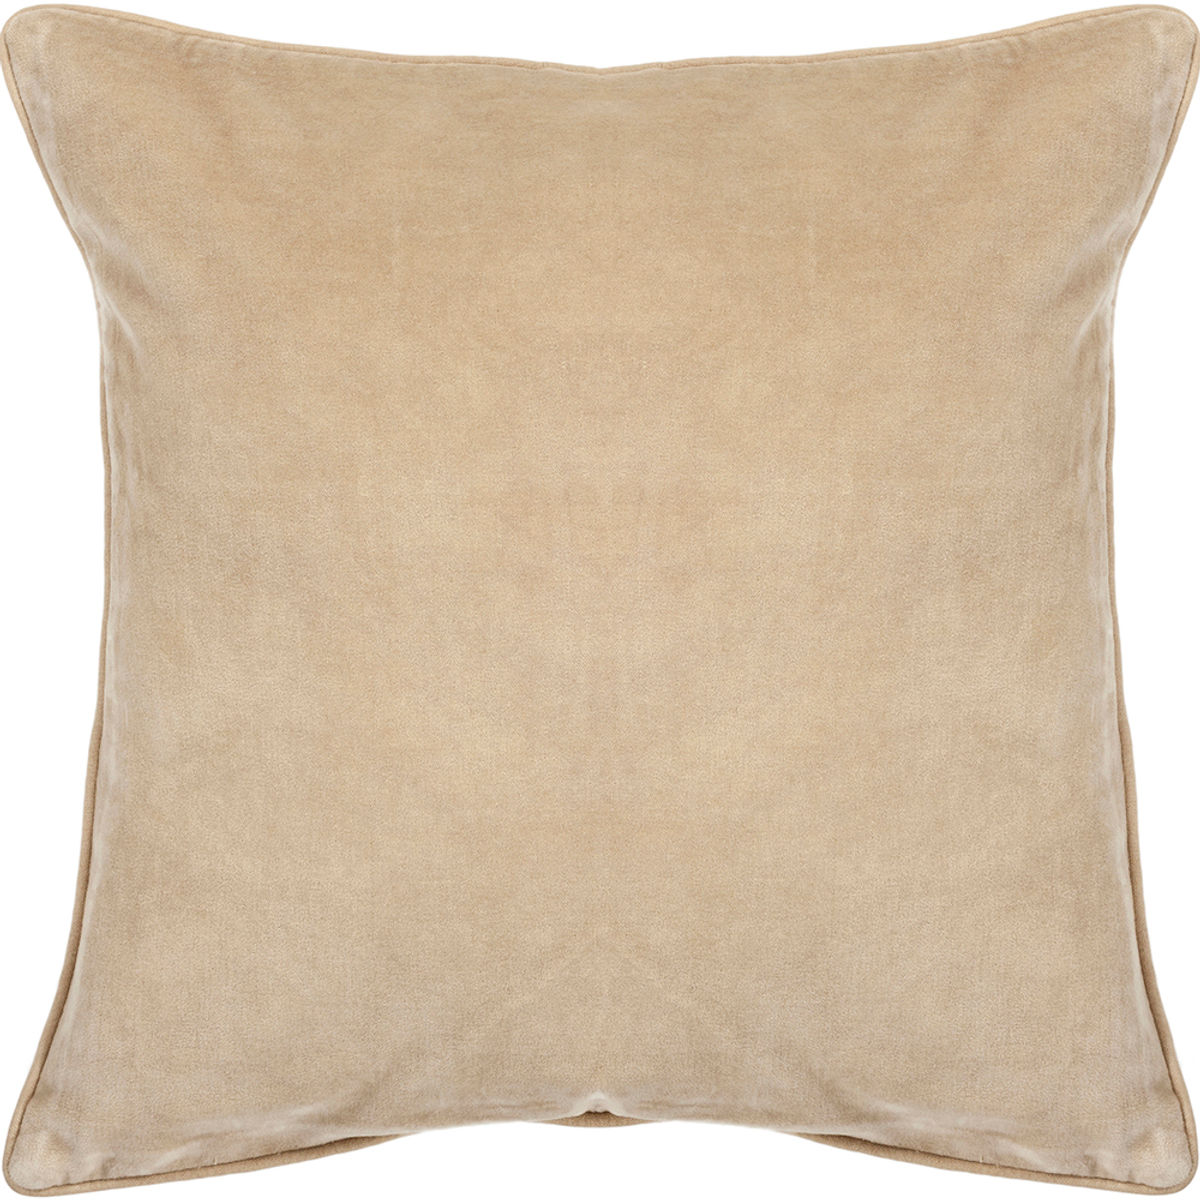 Pillows, Cus-28019